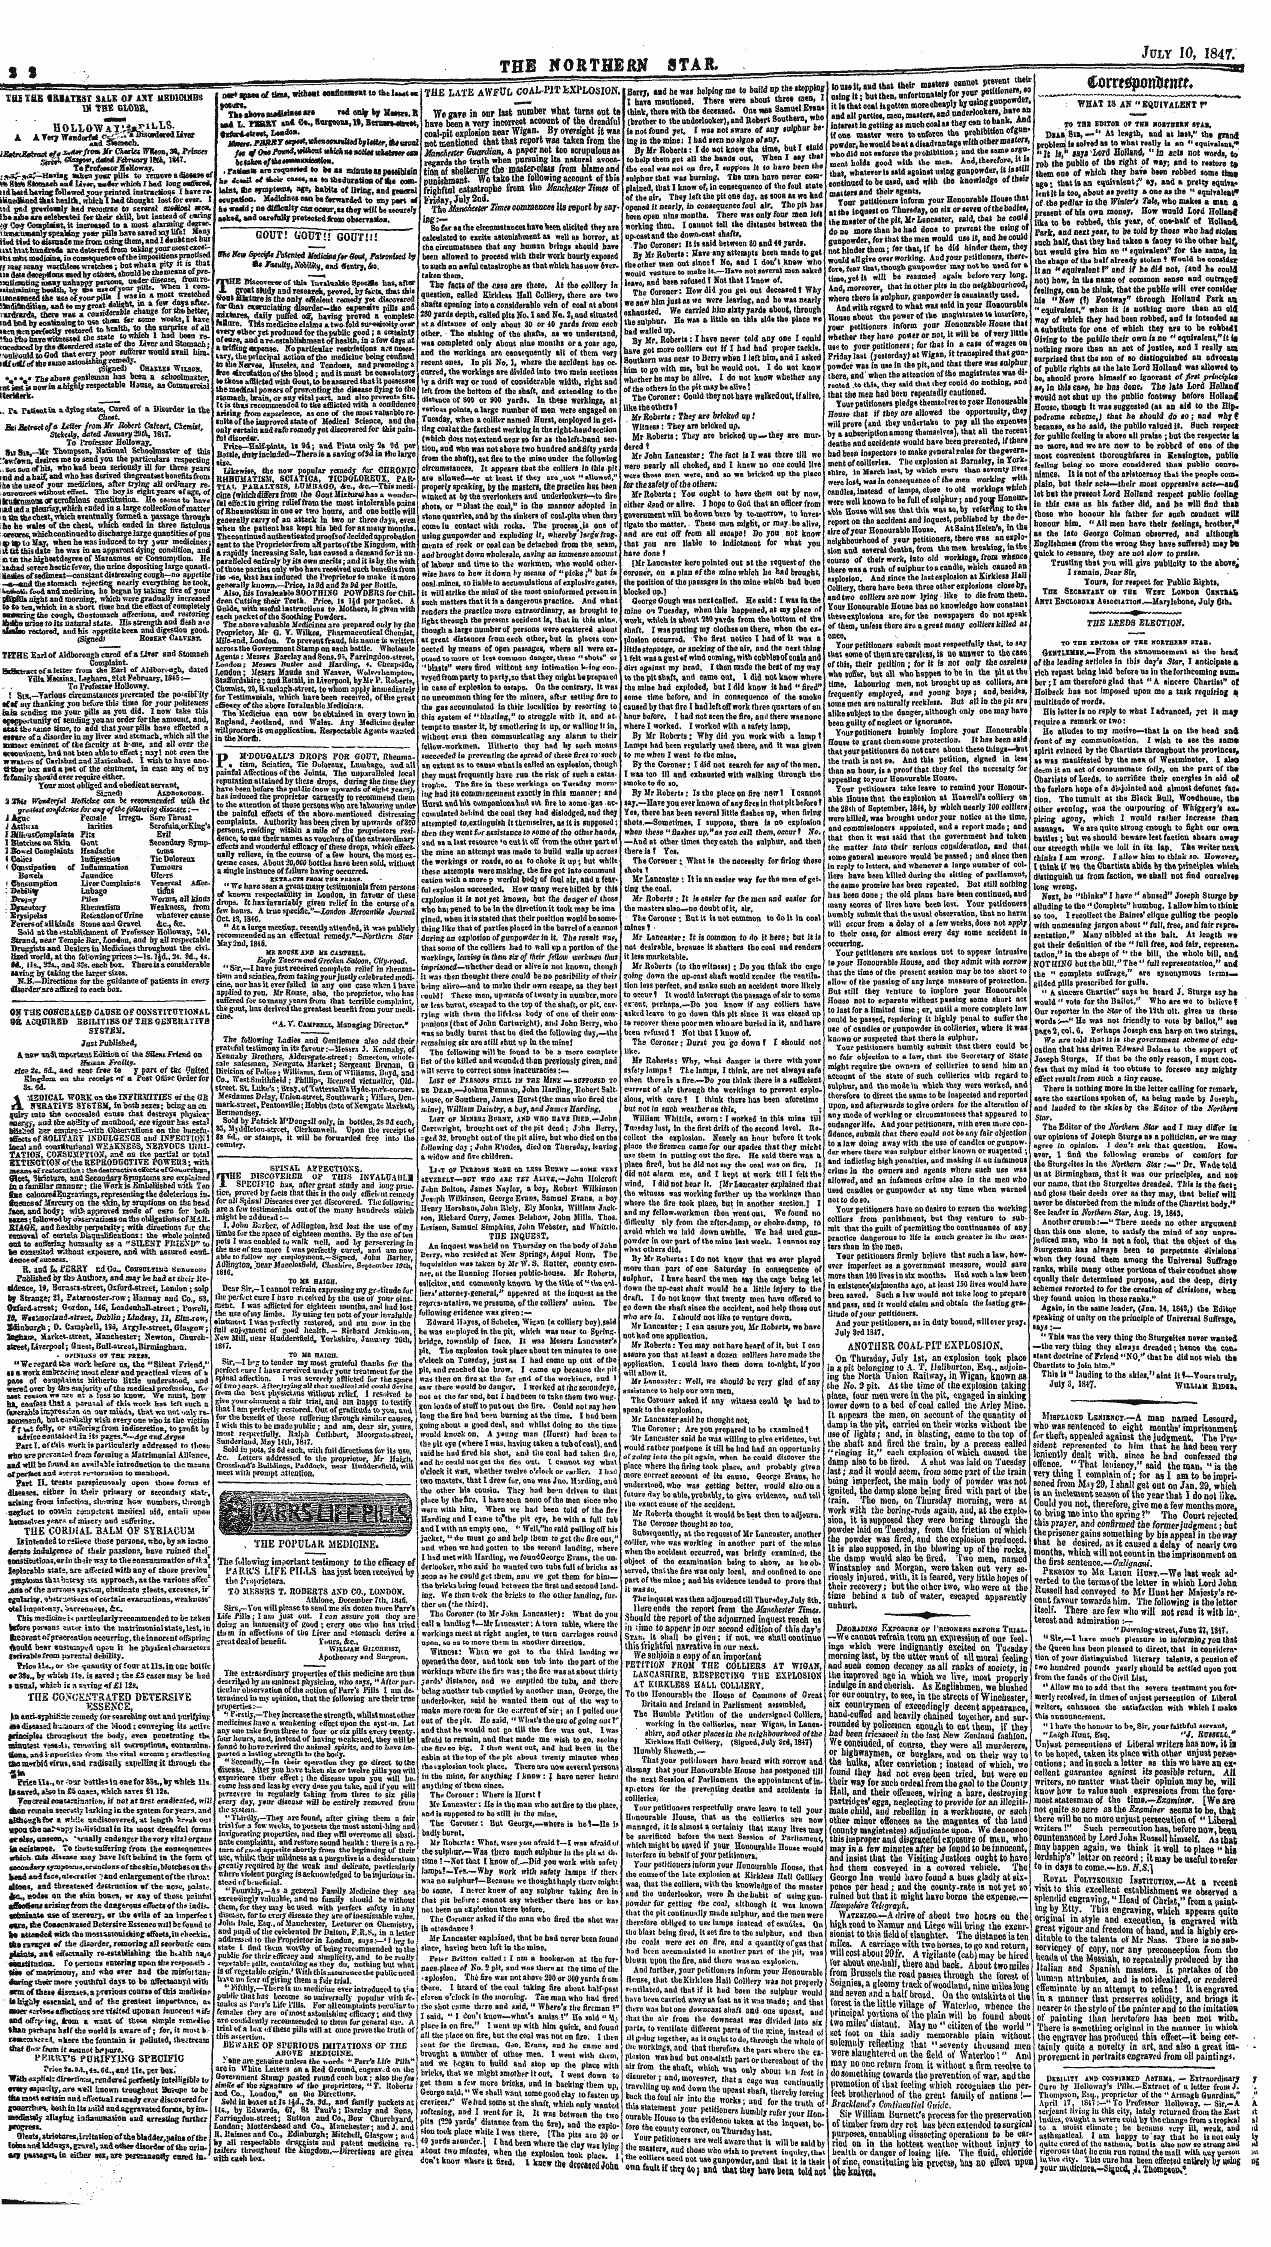 Northern Star (1837-1852): jS F Y, 3rd edition - - Thb Northern »Ai , Uly -L 184 - 7 ^